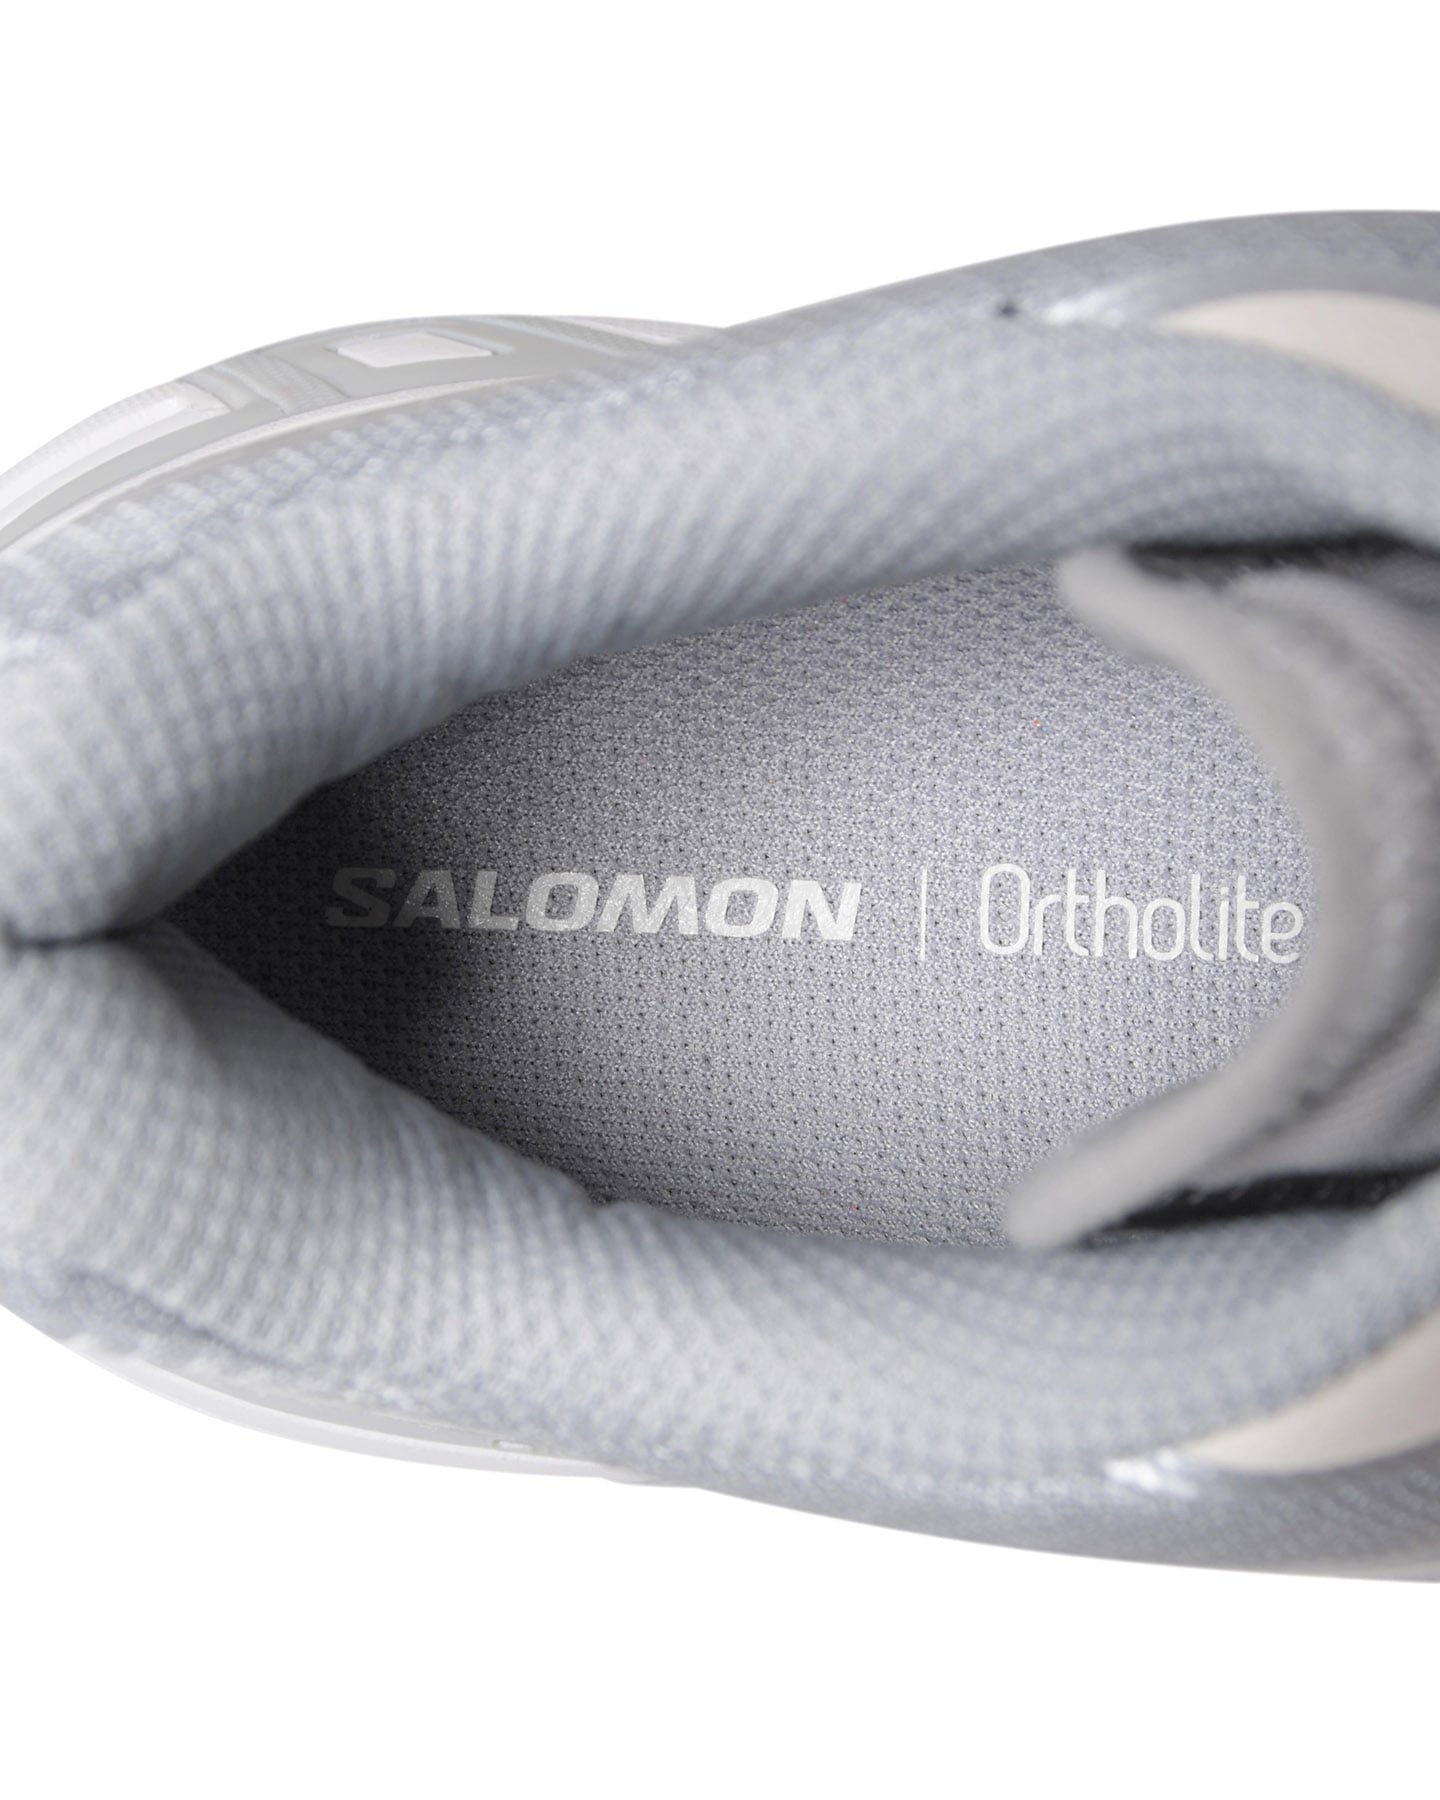 24.5㎝　SOPHNET. SALOMON XT-WINGS 2 スニーカー